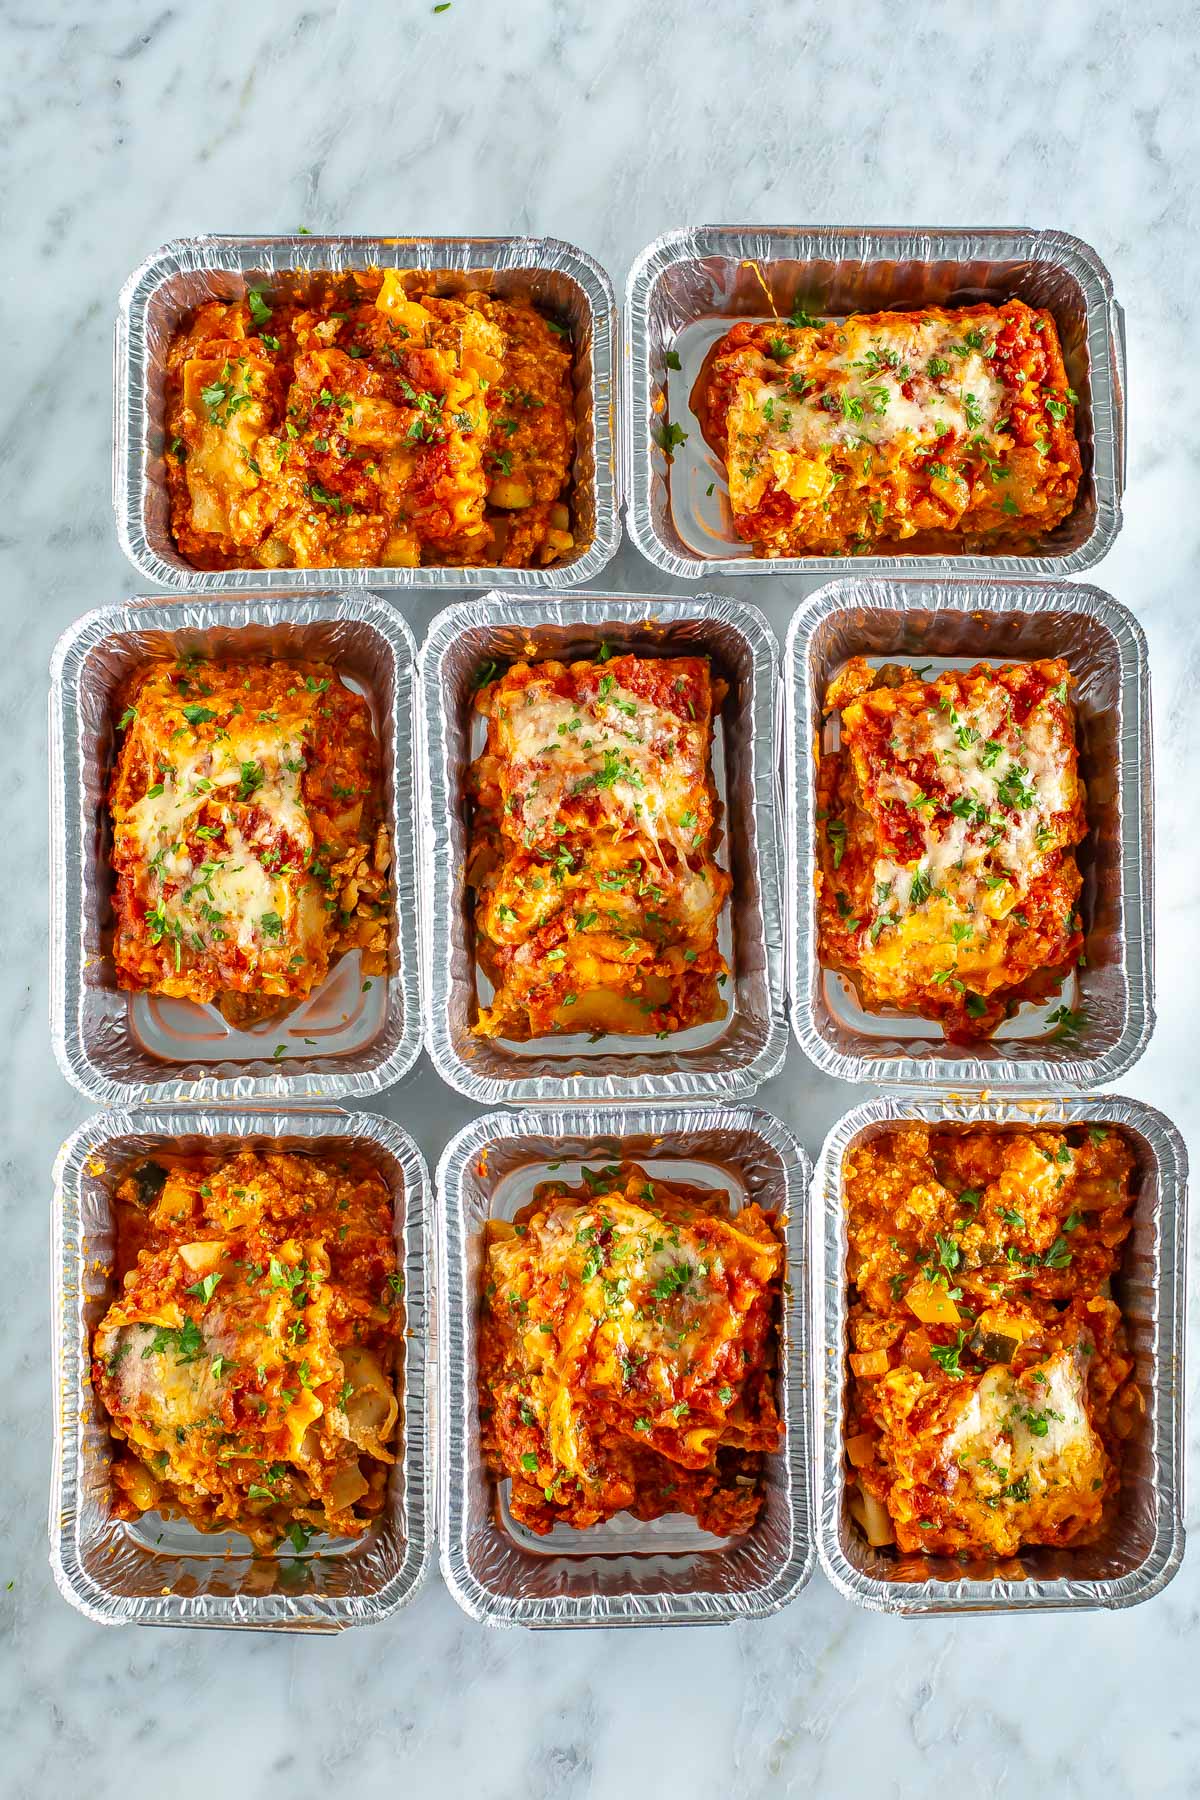 8 slices of vegetarian lasagna in individual aluminum food containers.